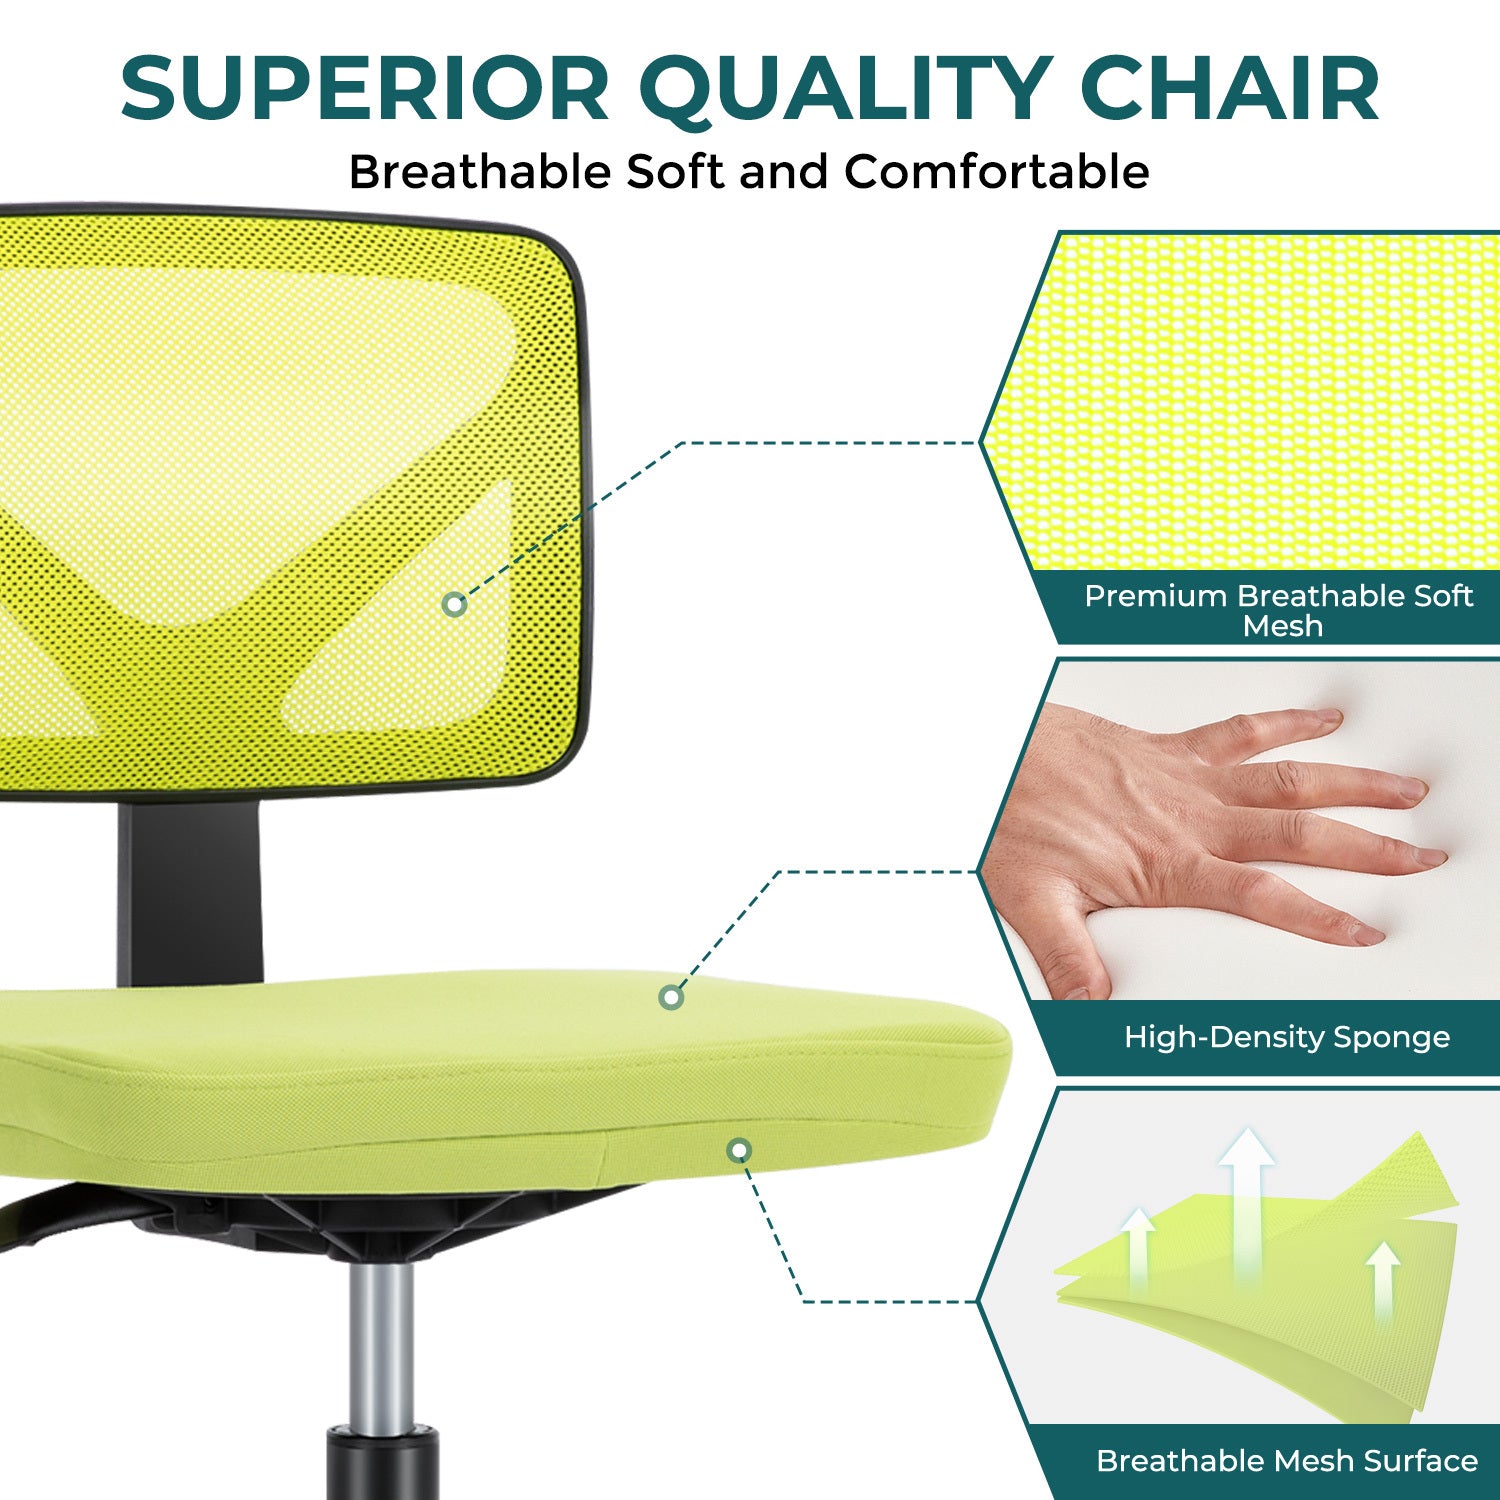 Sweetcrispy Armless Desk Chair Small Home Office Chair green-nylon mesh